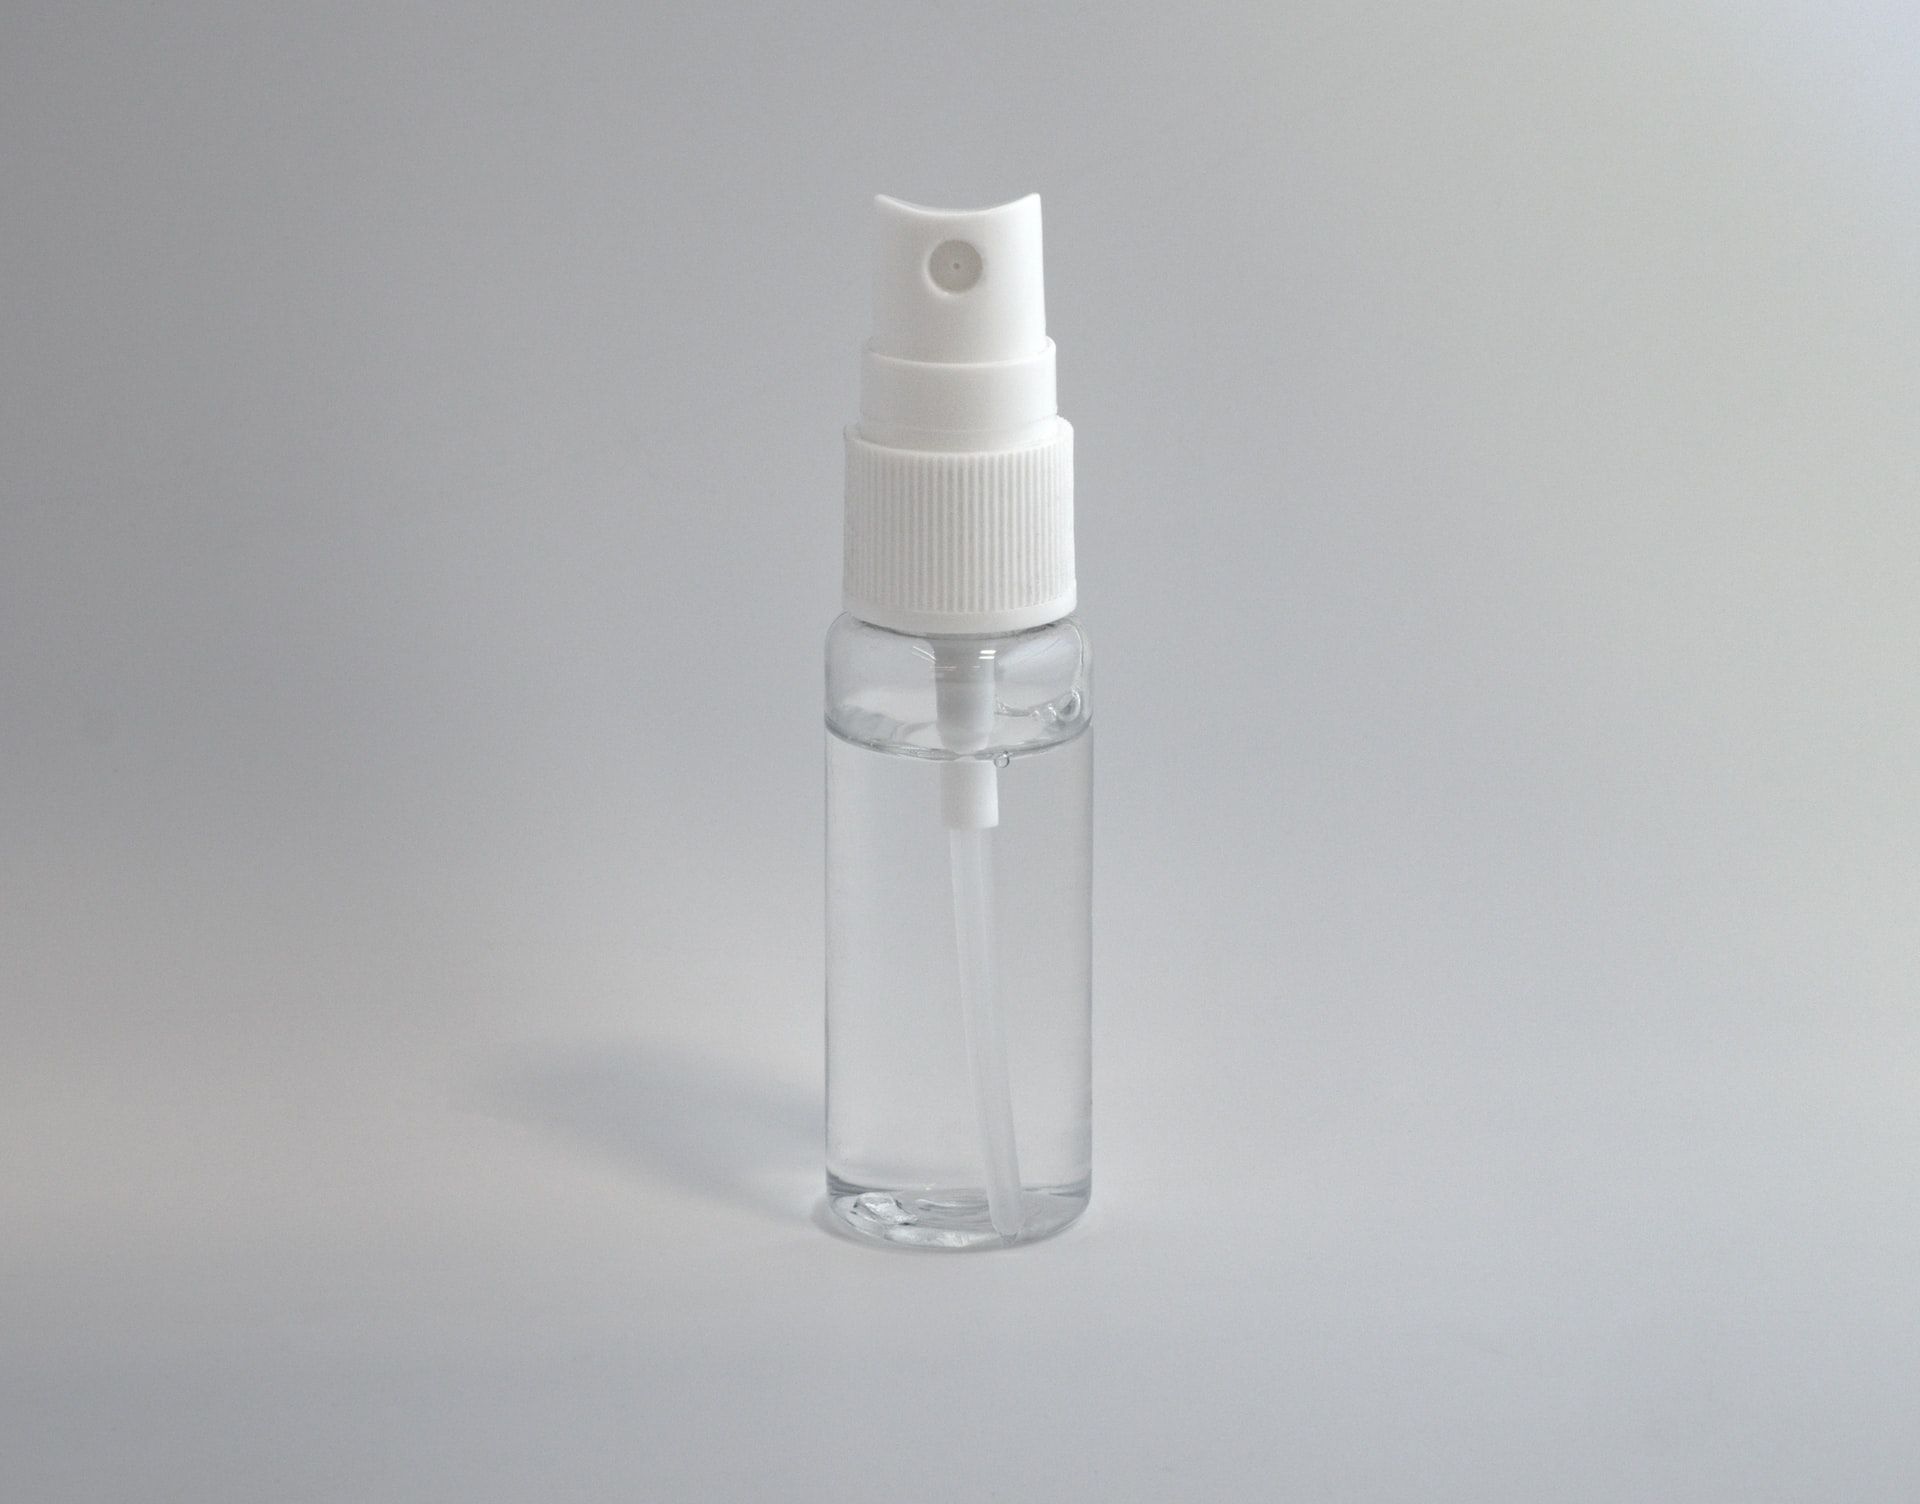 A small spray bottle